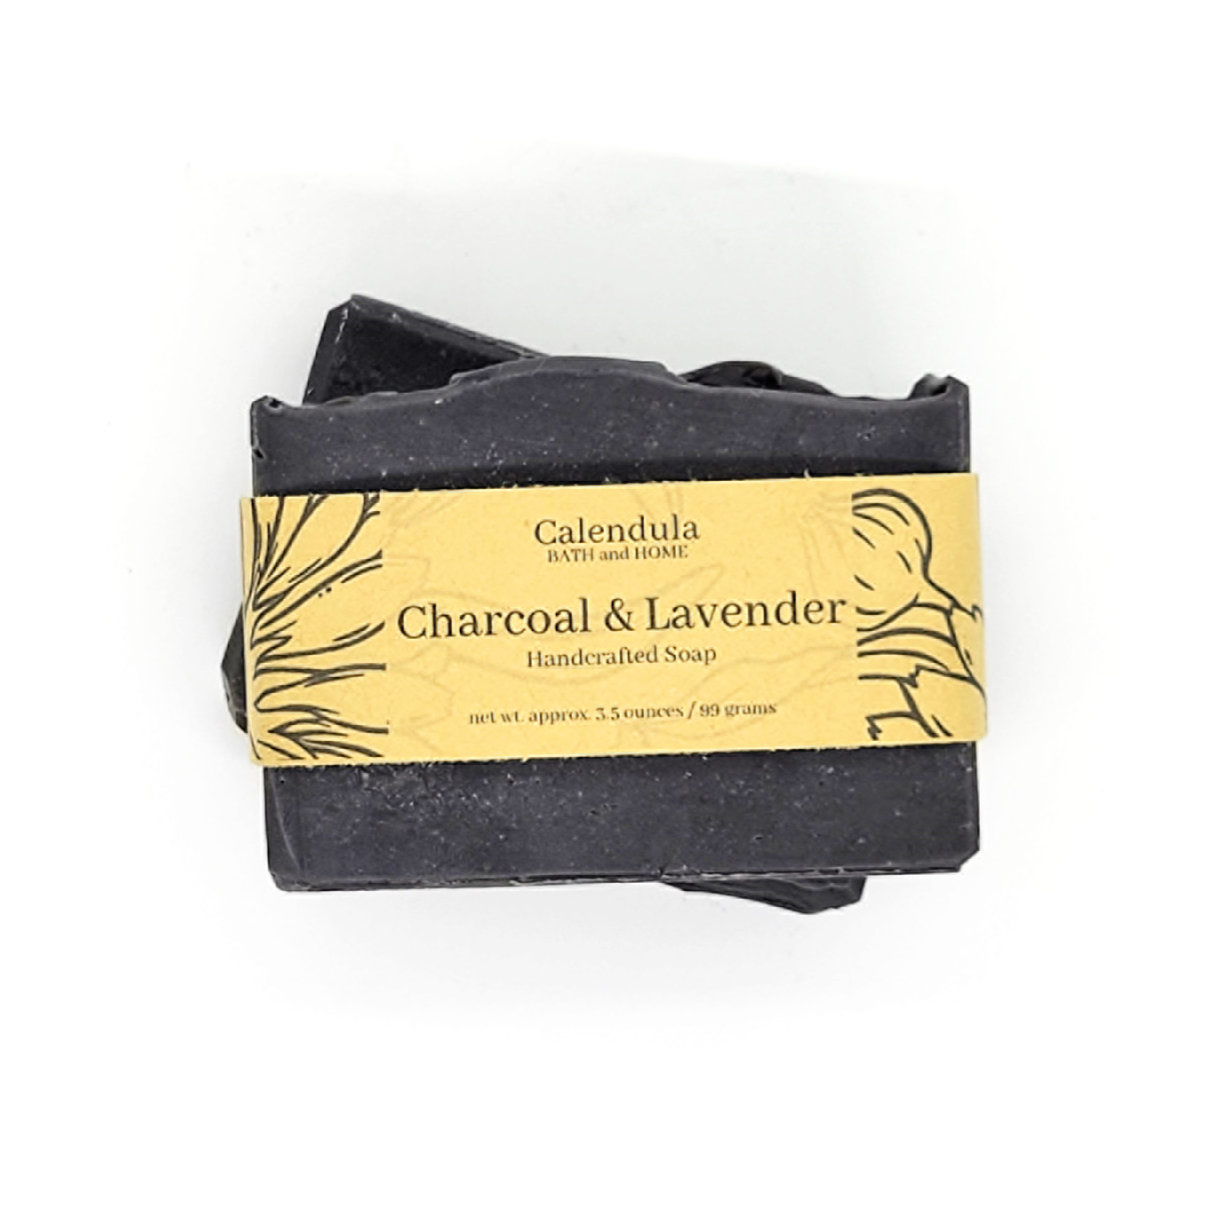 Charcoal & Lavender Goat Milk Soap - Calendula Bath and Home